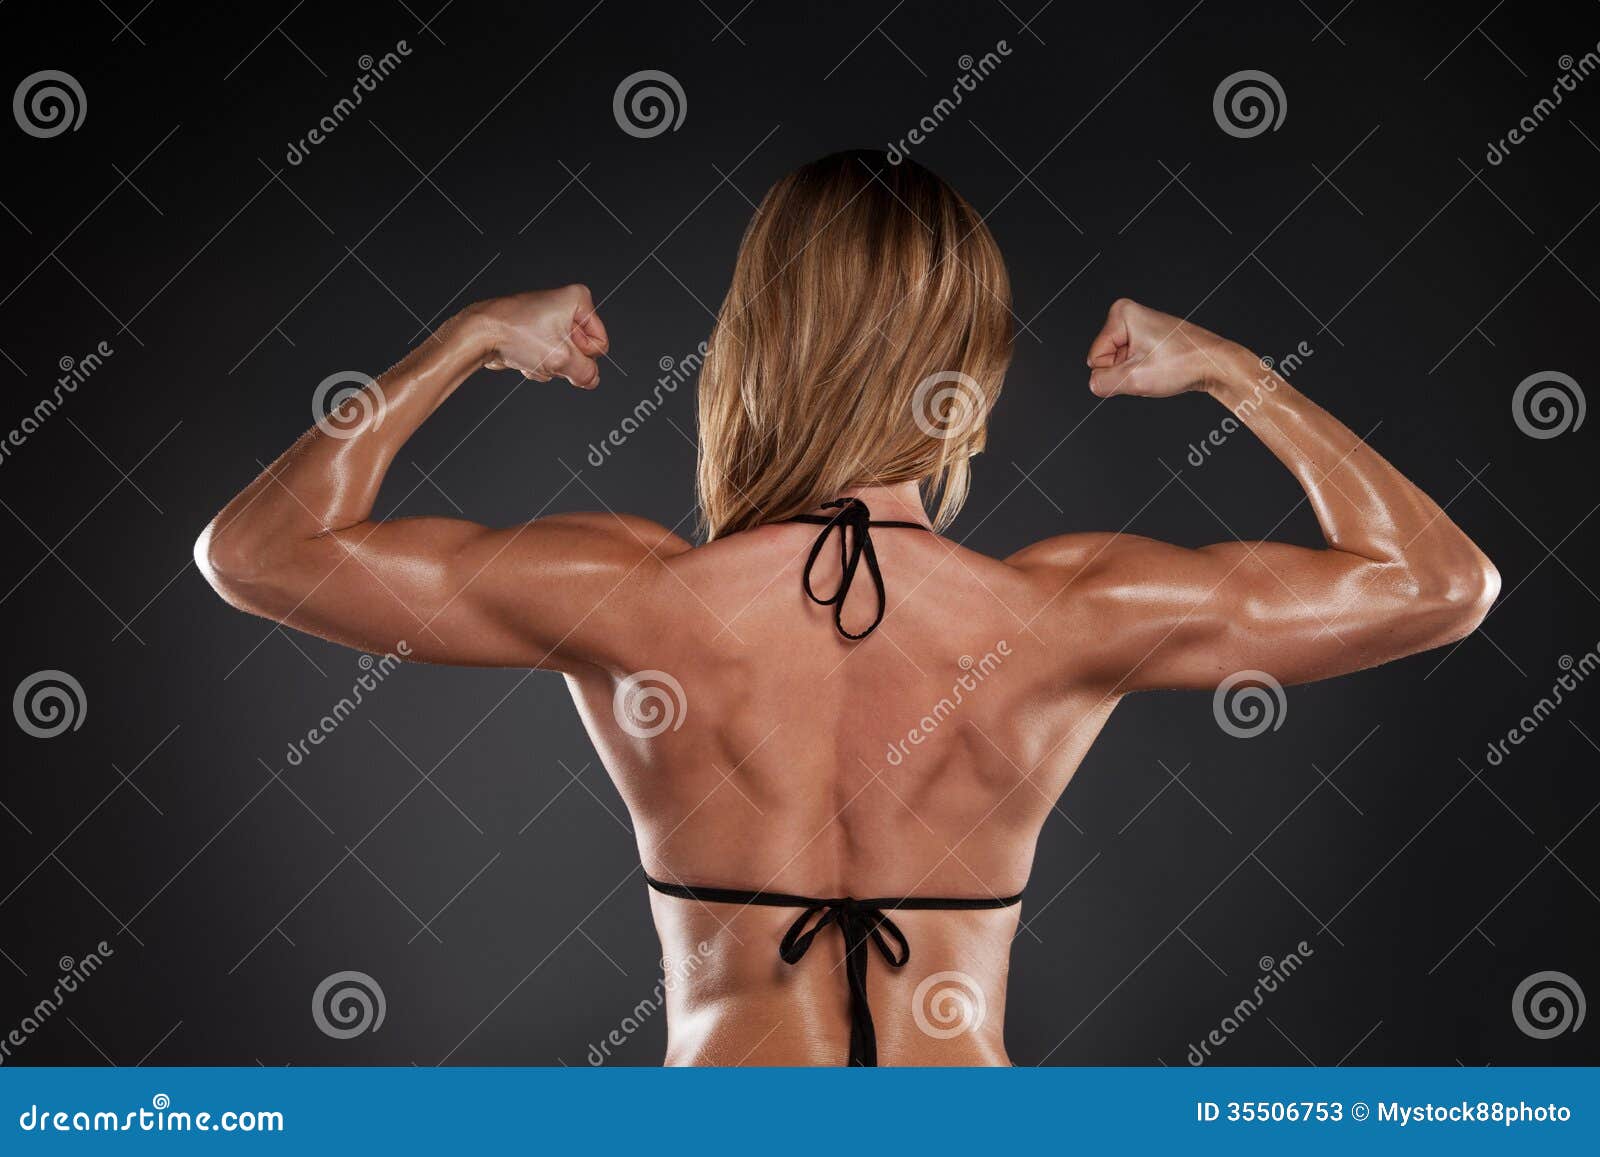 Muscular Female Back in Black Bikini. Stock Image - Image of hands